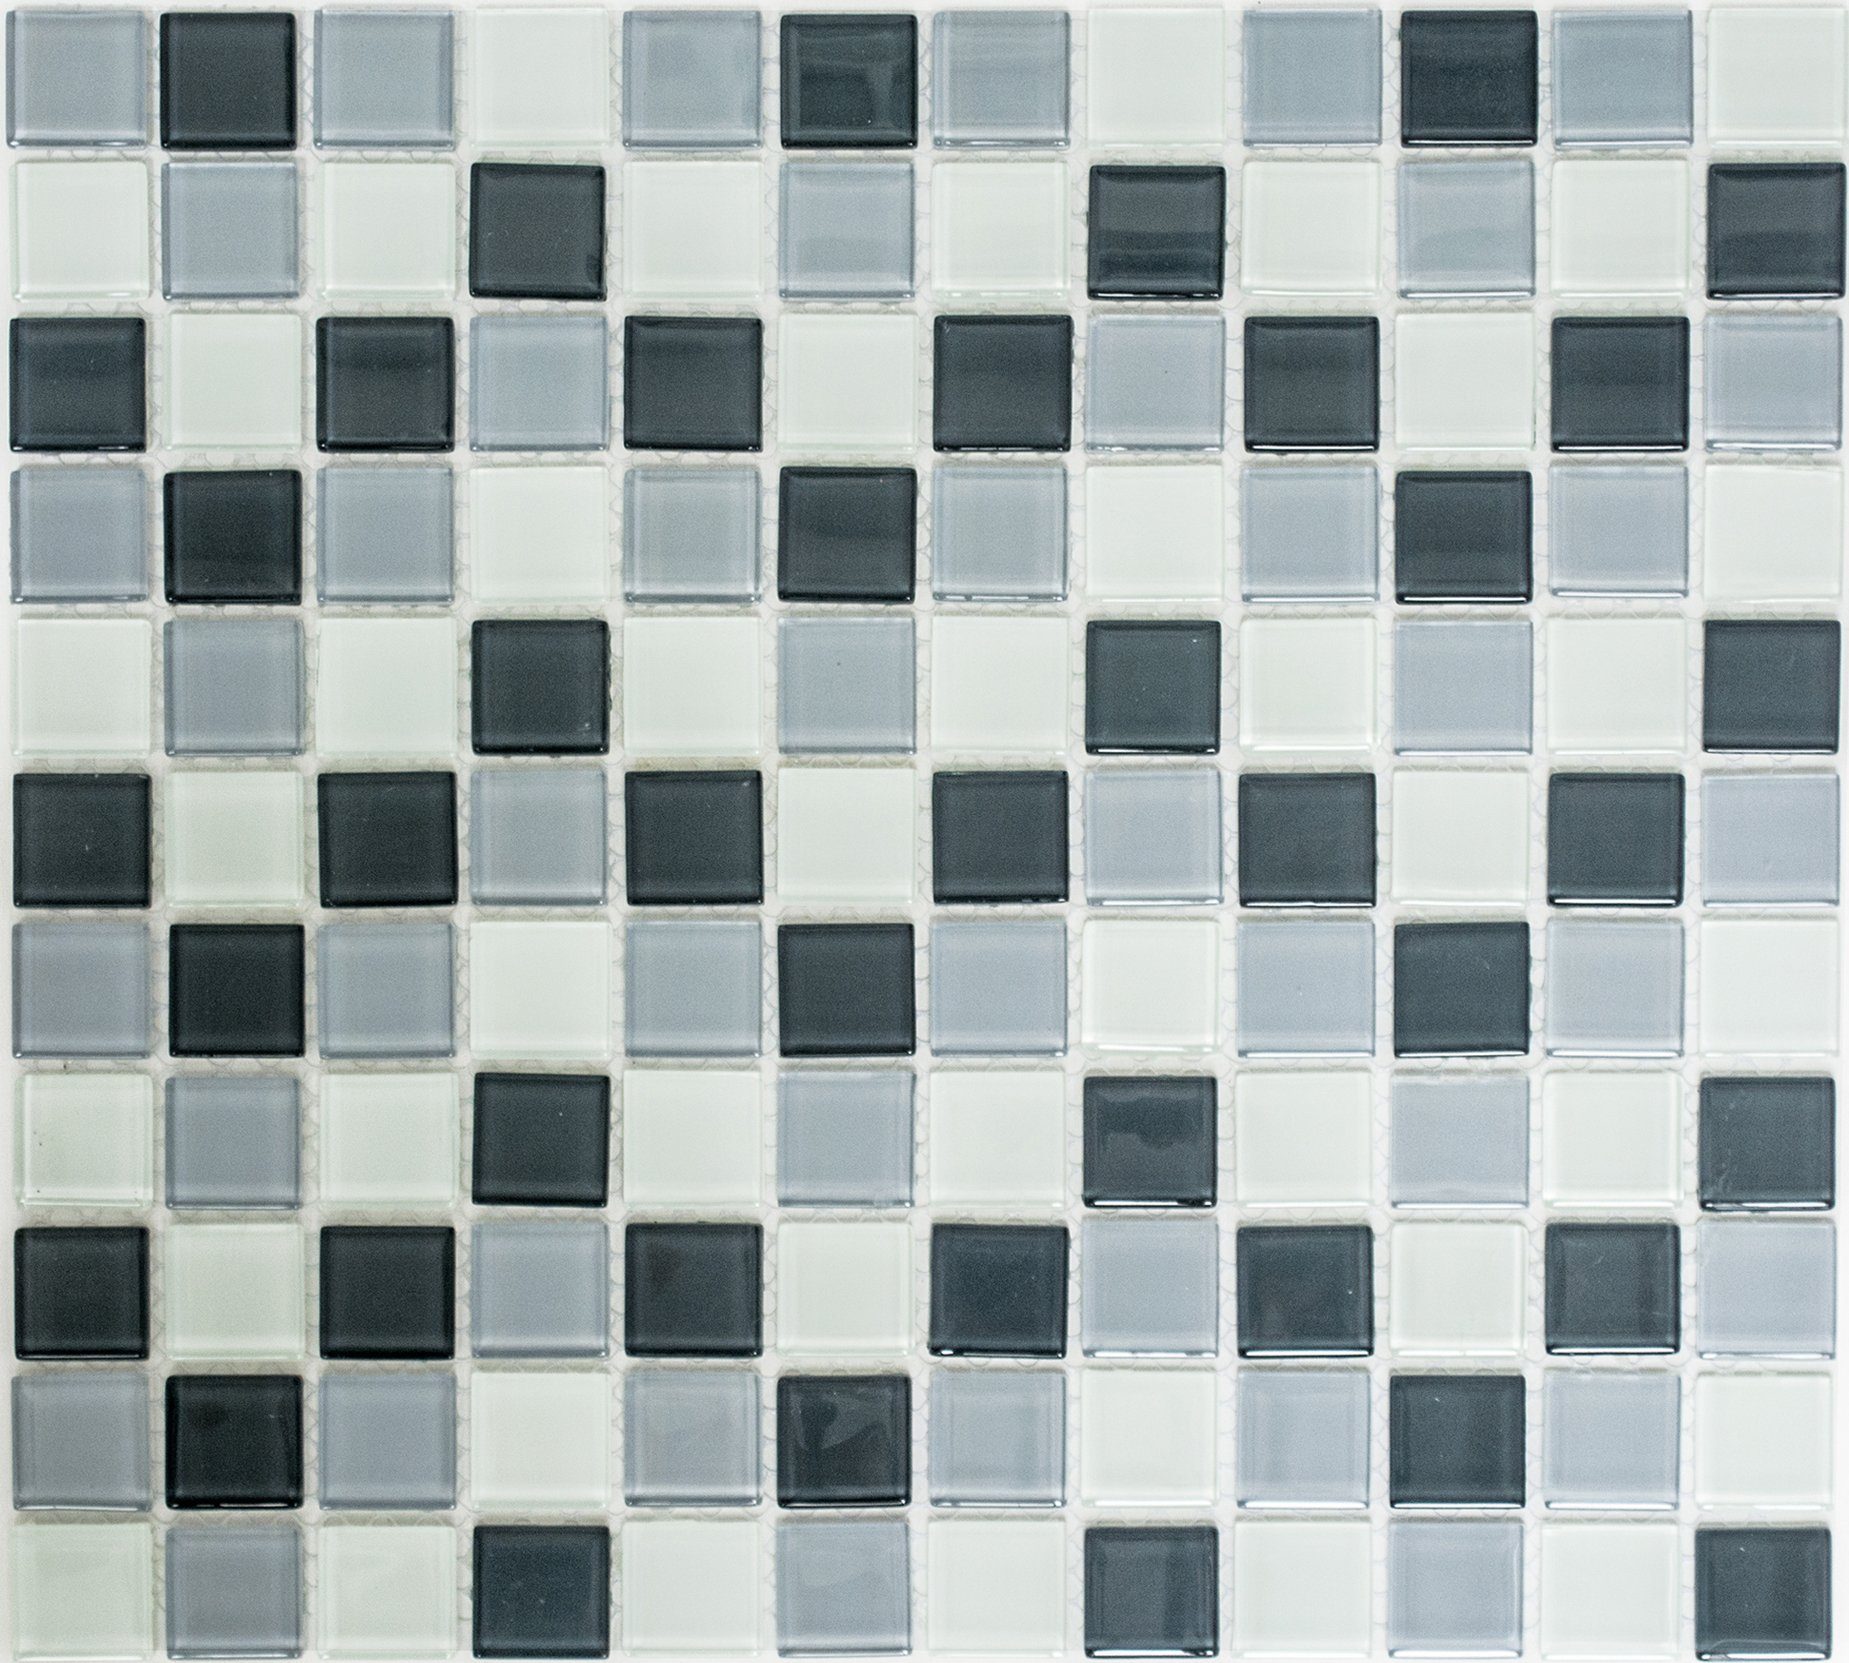 Mosani Mosaikfliesen Mosaik Glasmosaik Küche Fliesen BAD grau anthrazit WC weiss